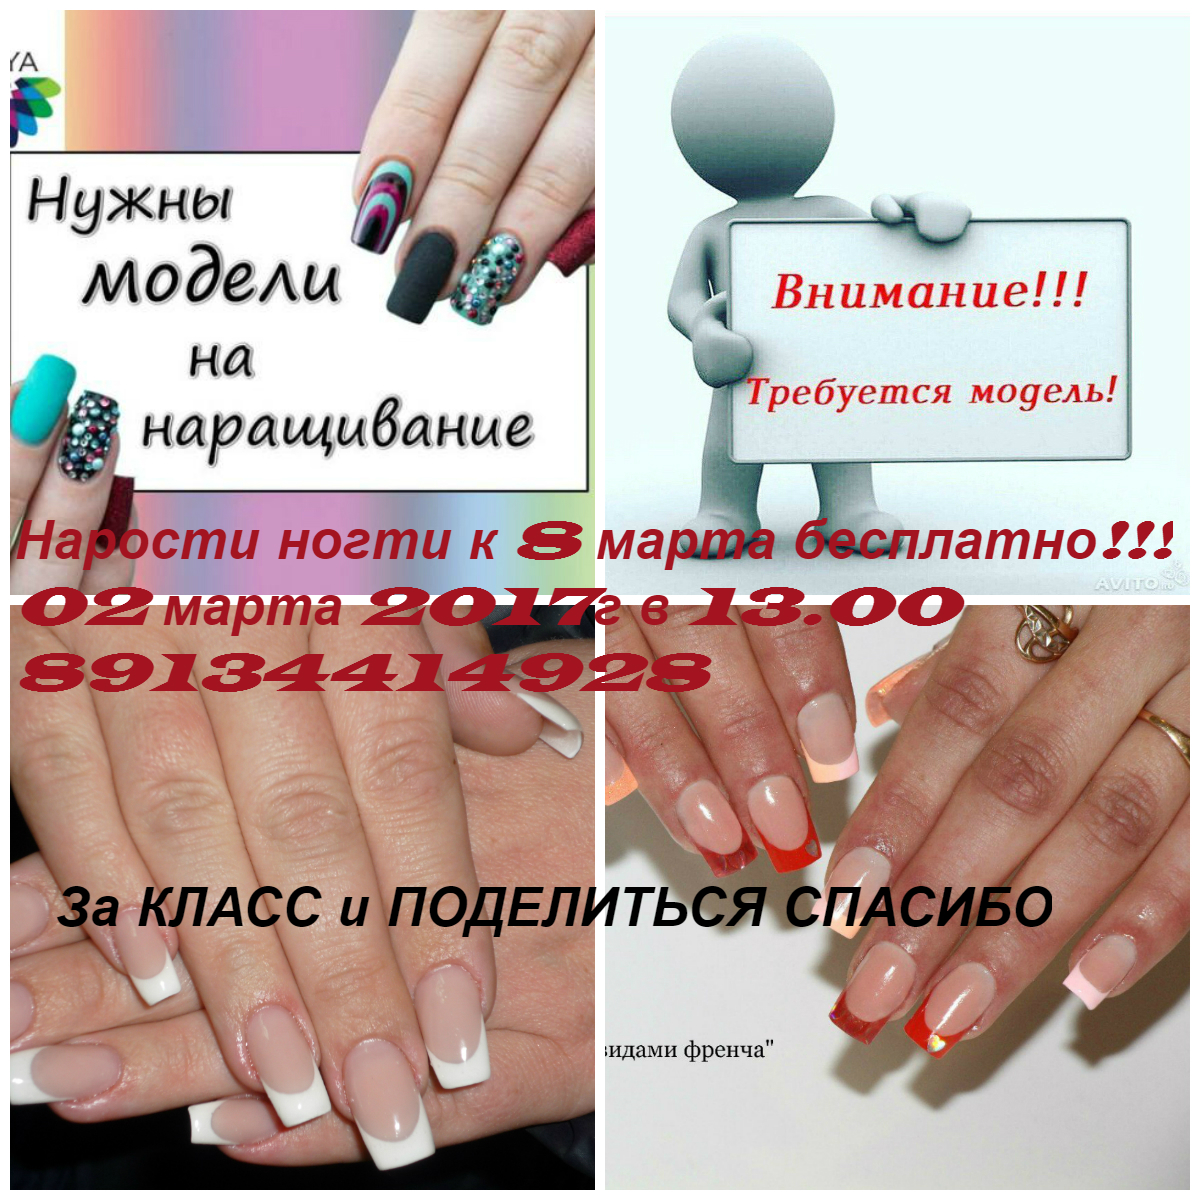 Саяногорск Инфо - collage1.jpg, Скачано: 135